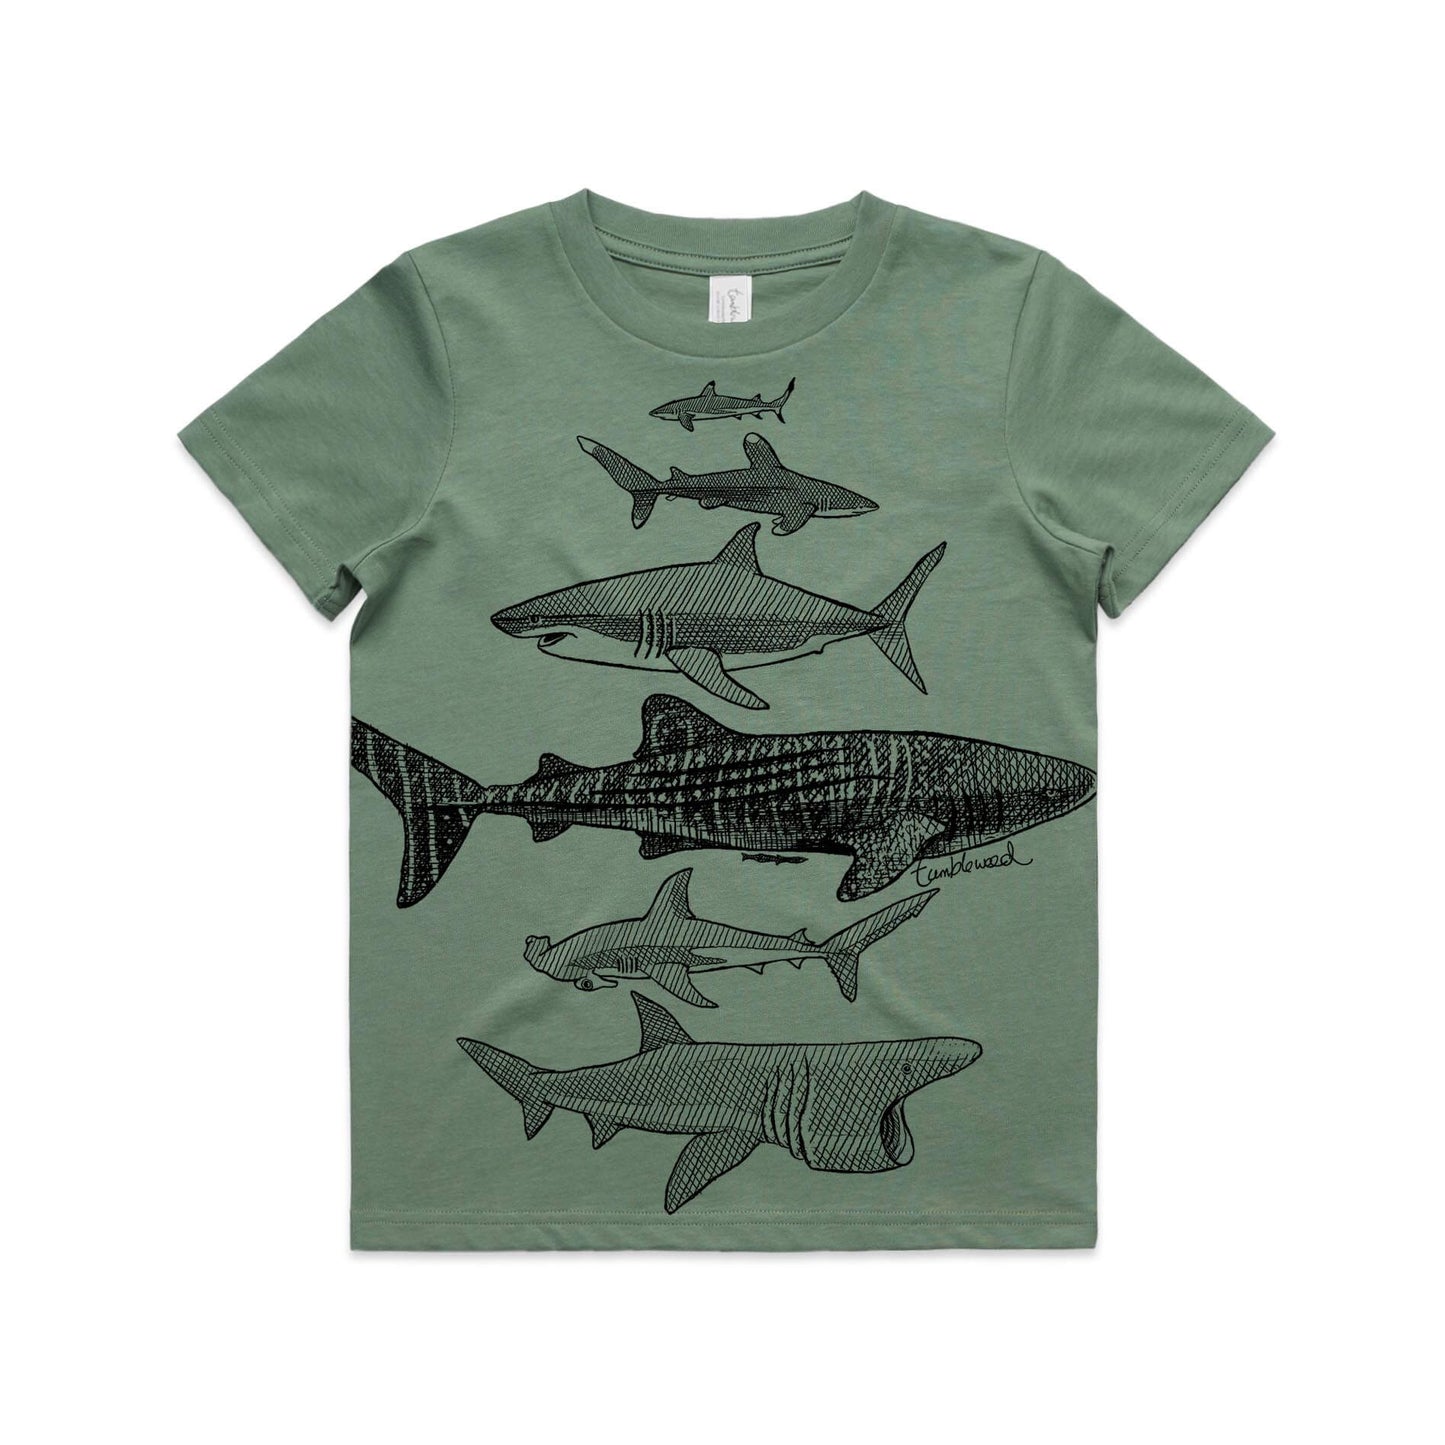 Sage, cotton kids' t-shirt with screen printed Kids shark design.